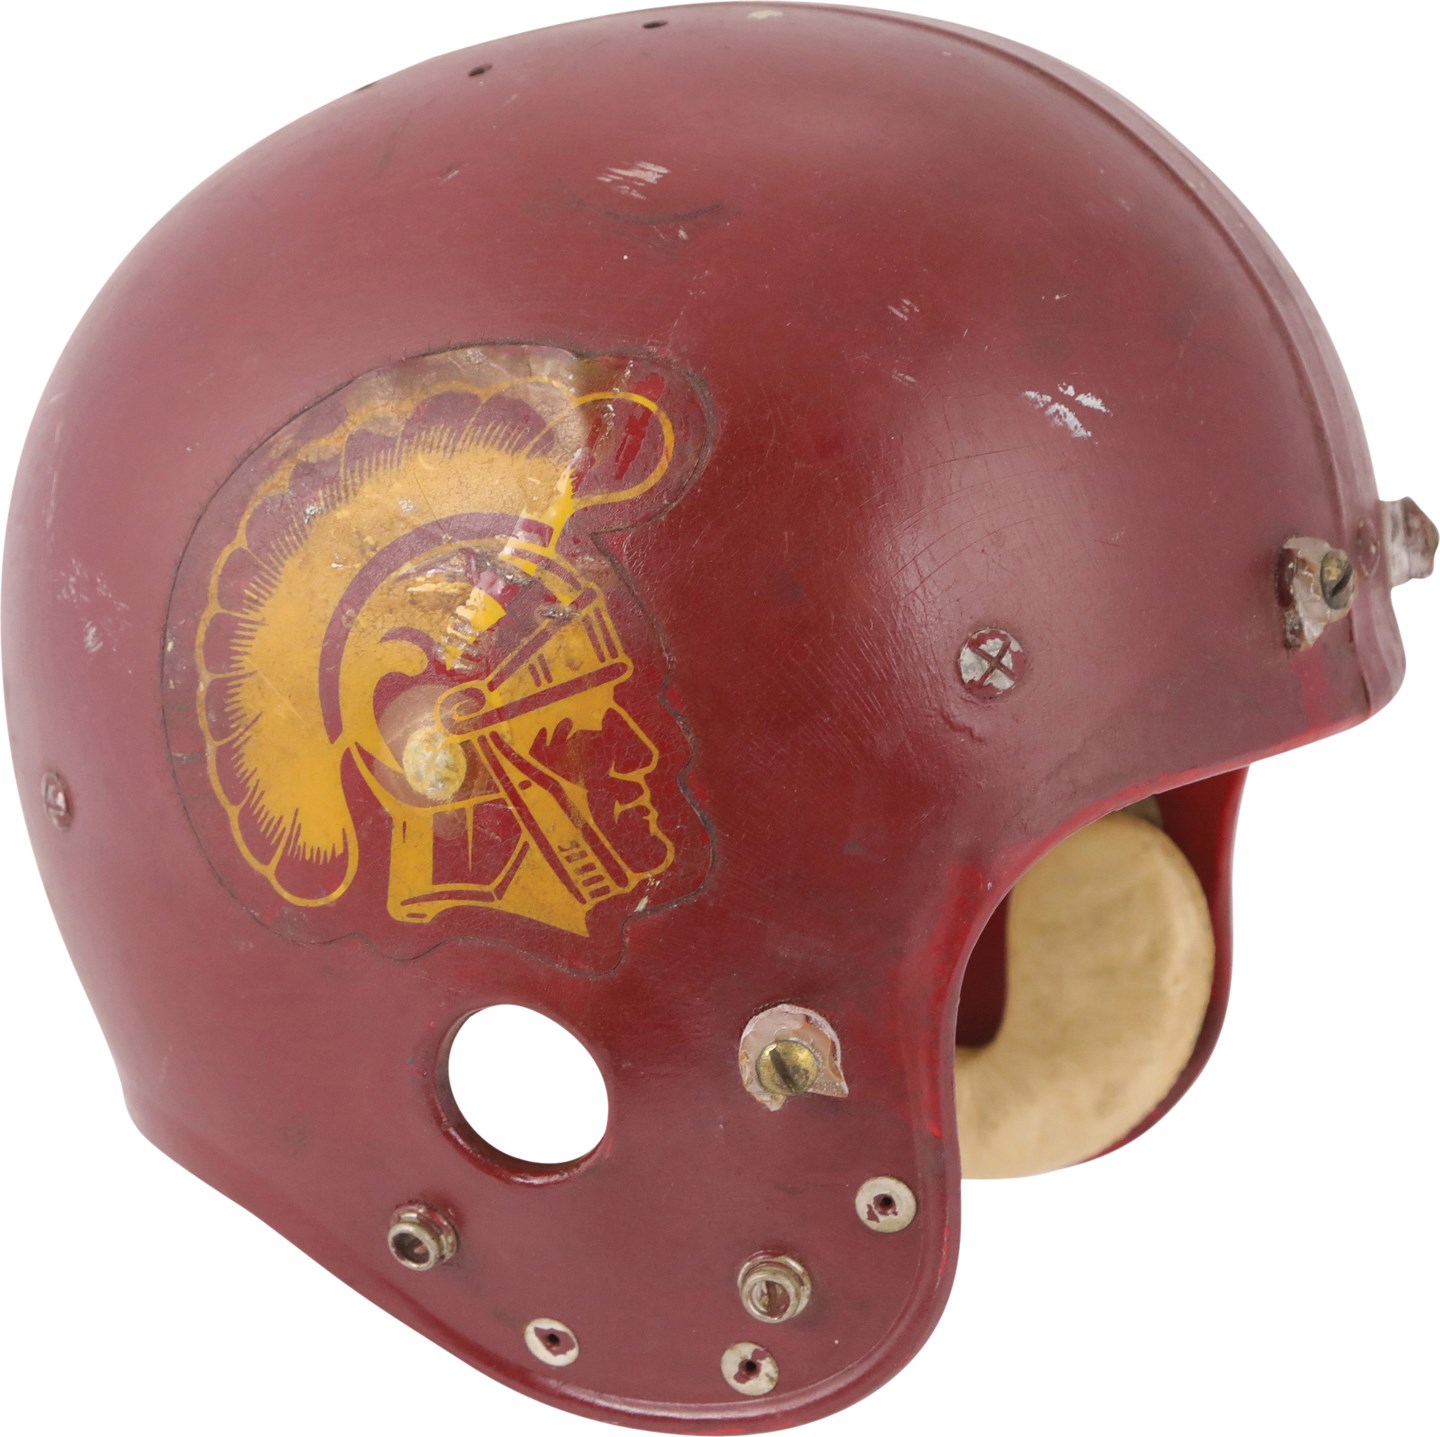 Football - 1974 George Stewart National Championship USC Trojans Game Used Helmet